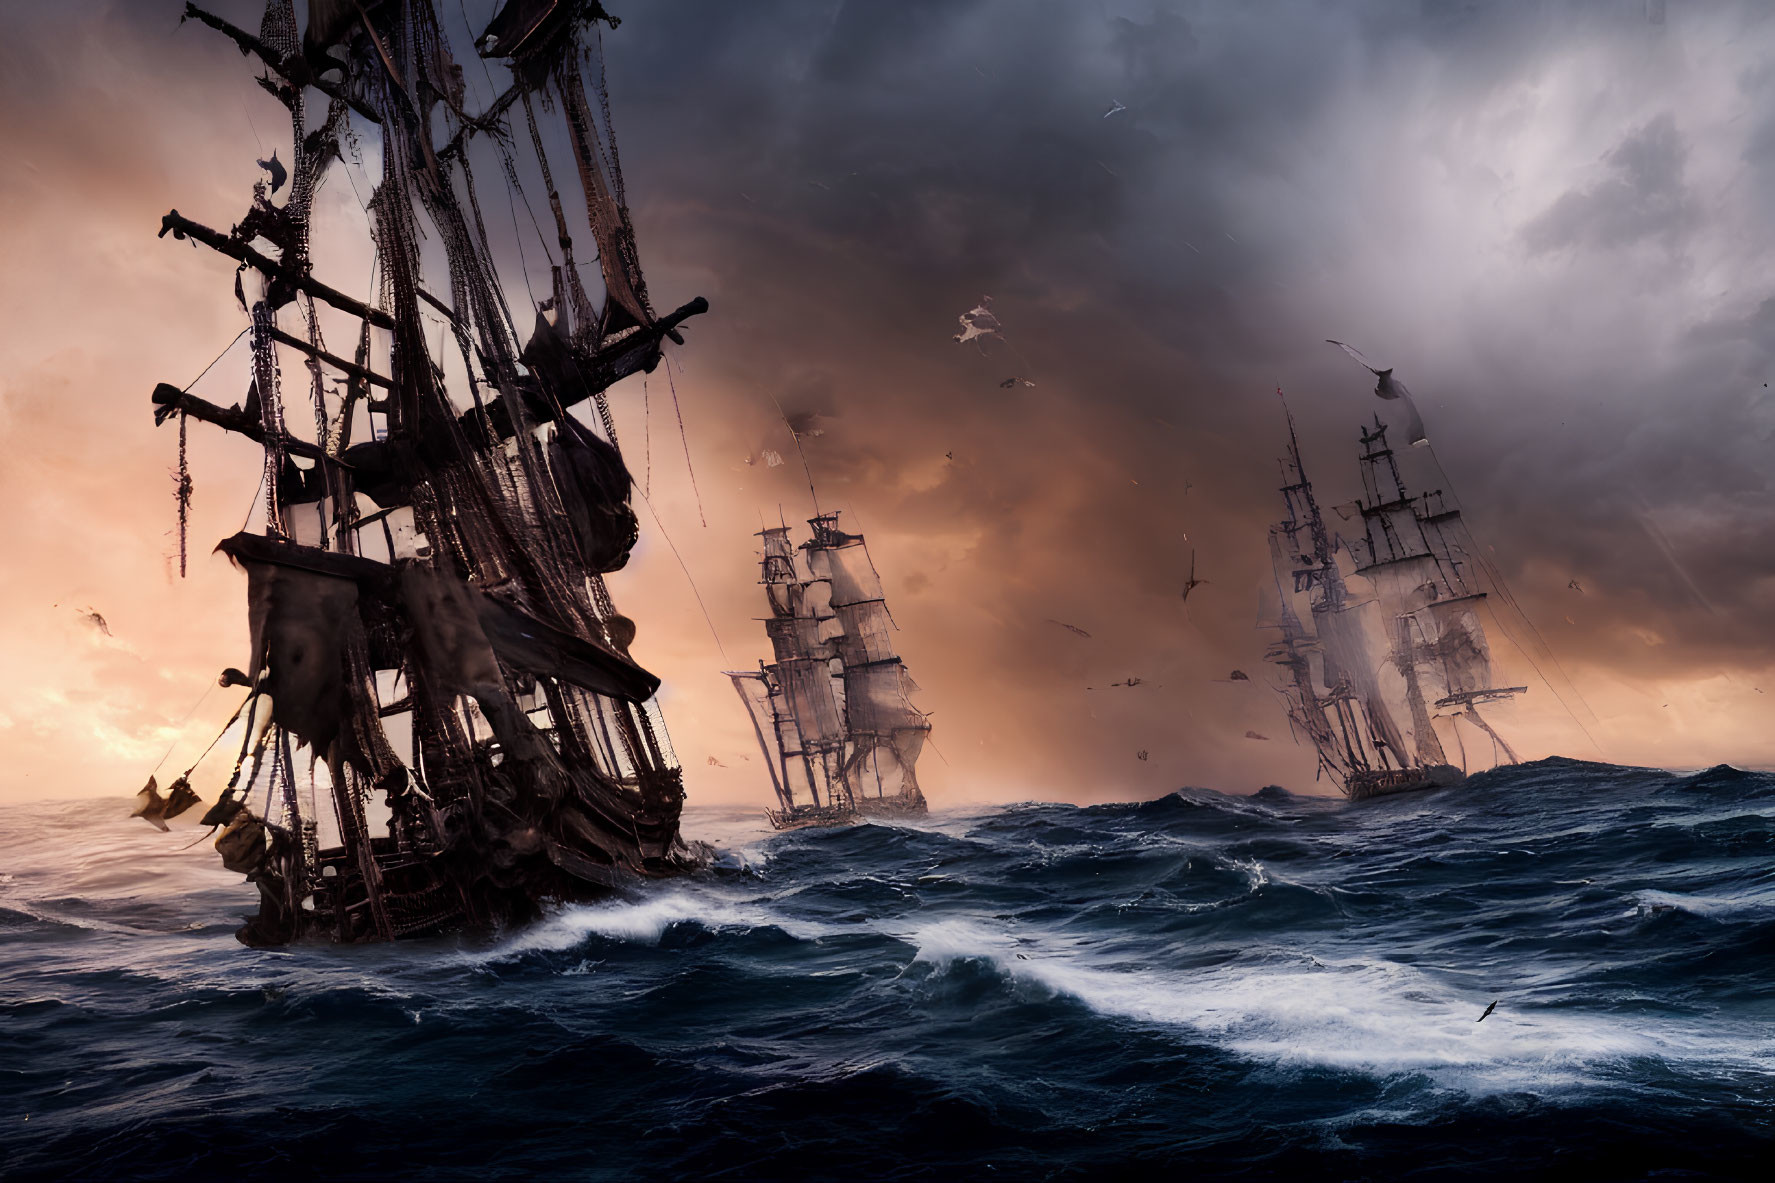 Stormy seas: sailing ships battle turbulent waves under dramatic sky